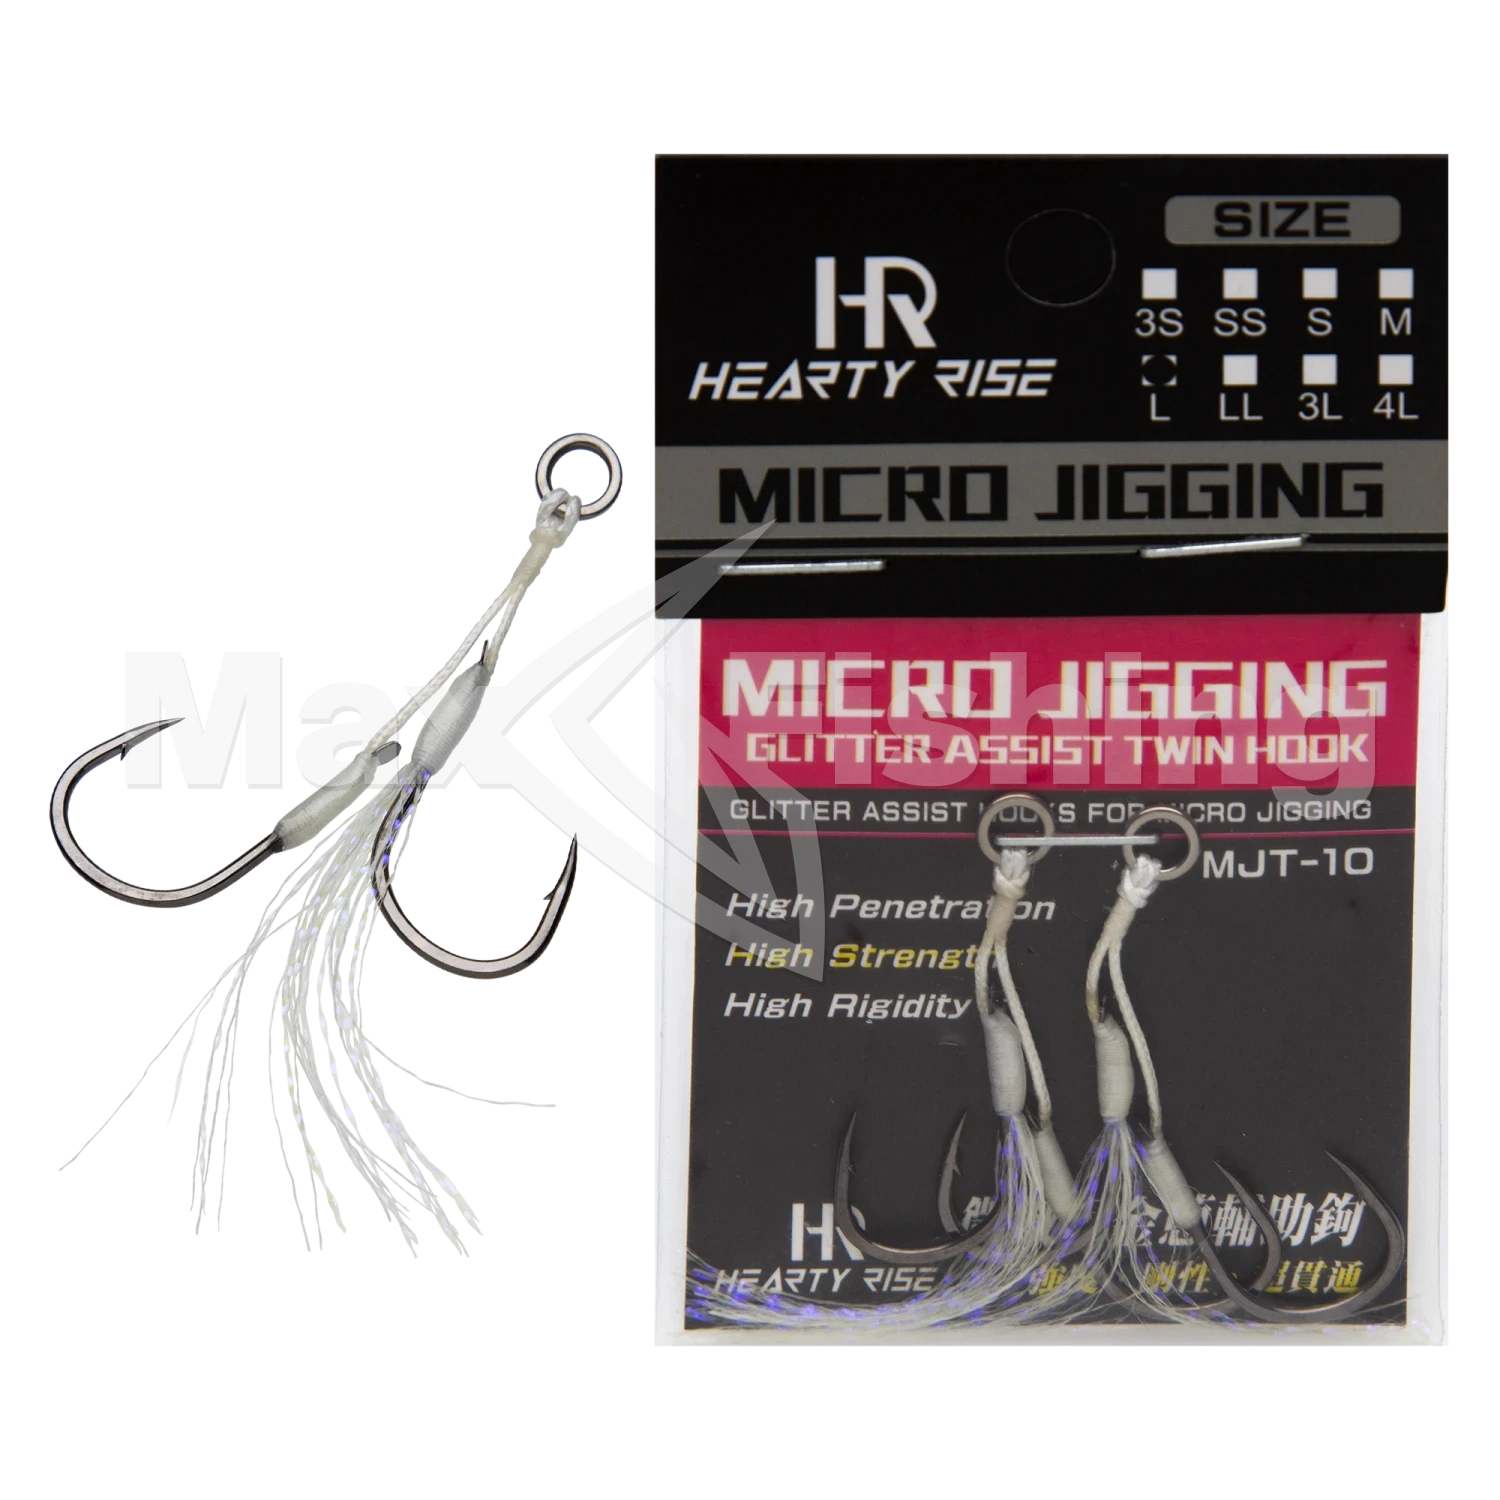 Крючок-ассист Hearty Rise Micro Jigging Glitter Assist Hook MJT-10 #8 (3S) (2 пары)